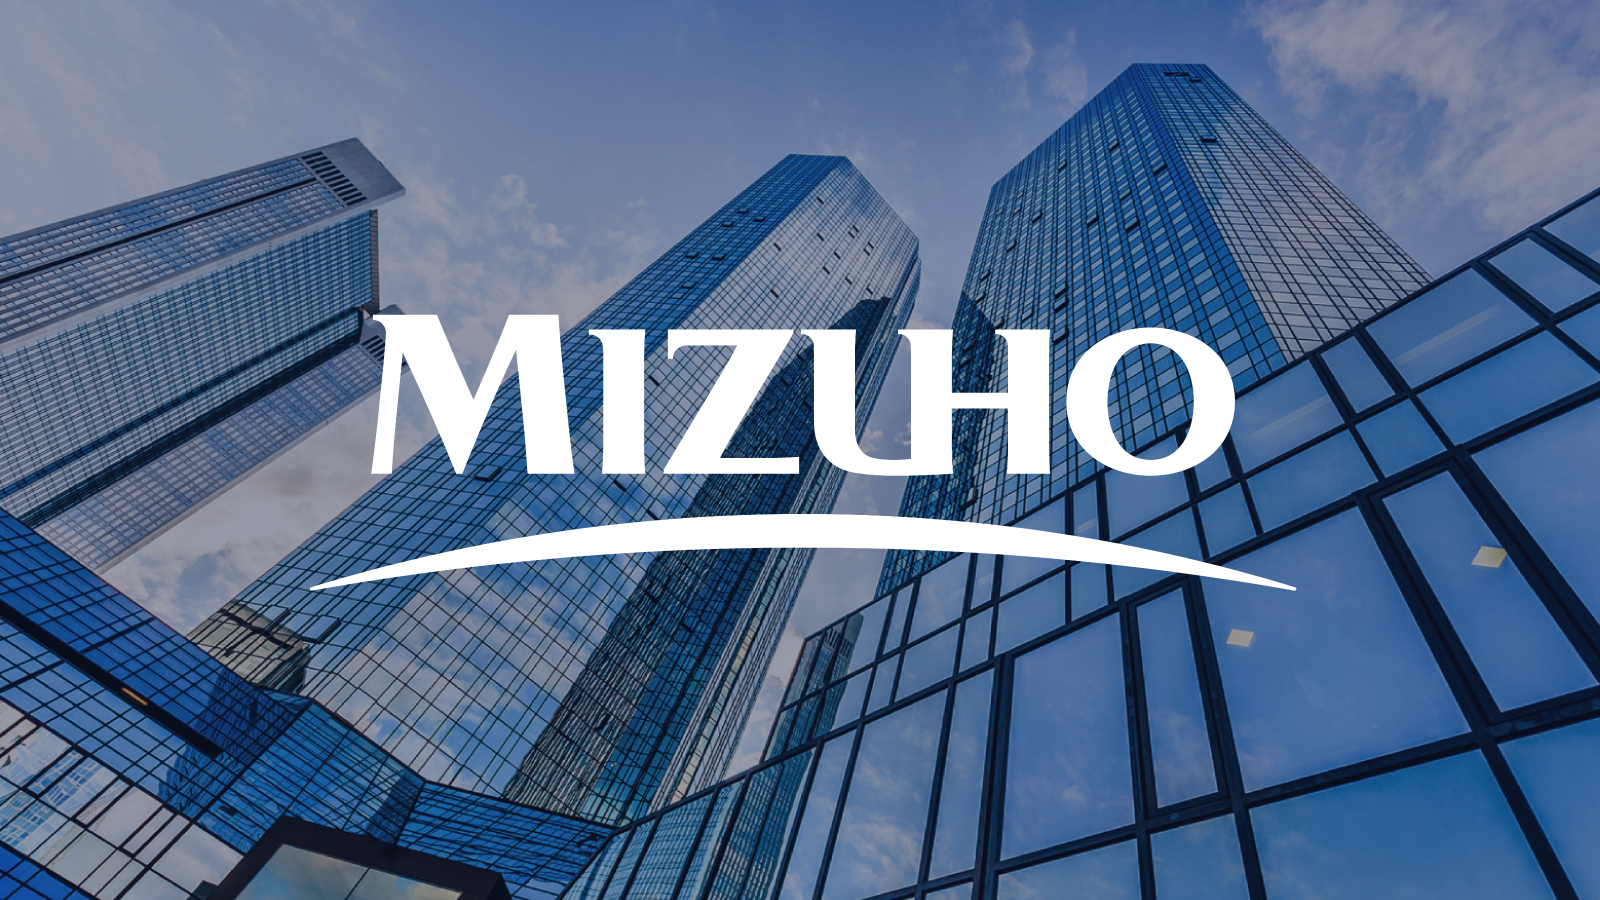 Graphic: Mizuho logo on buildings